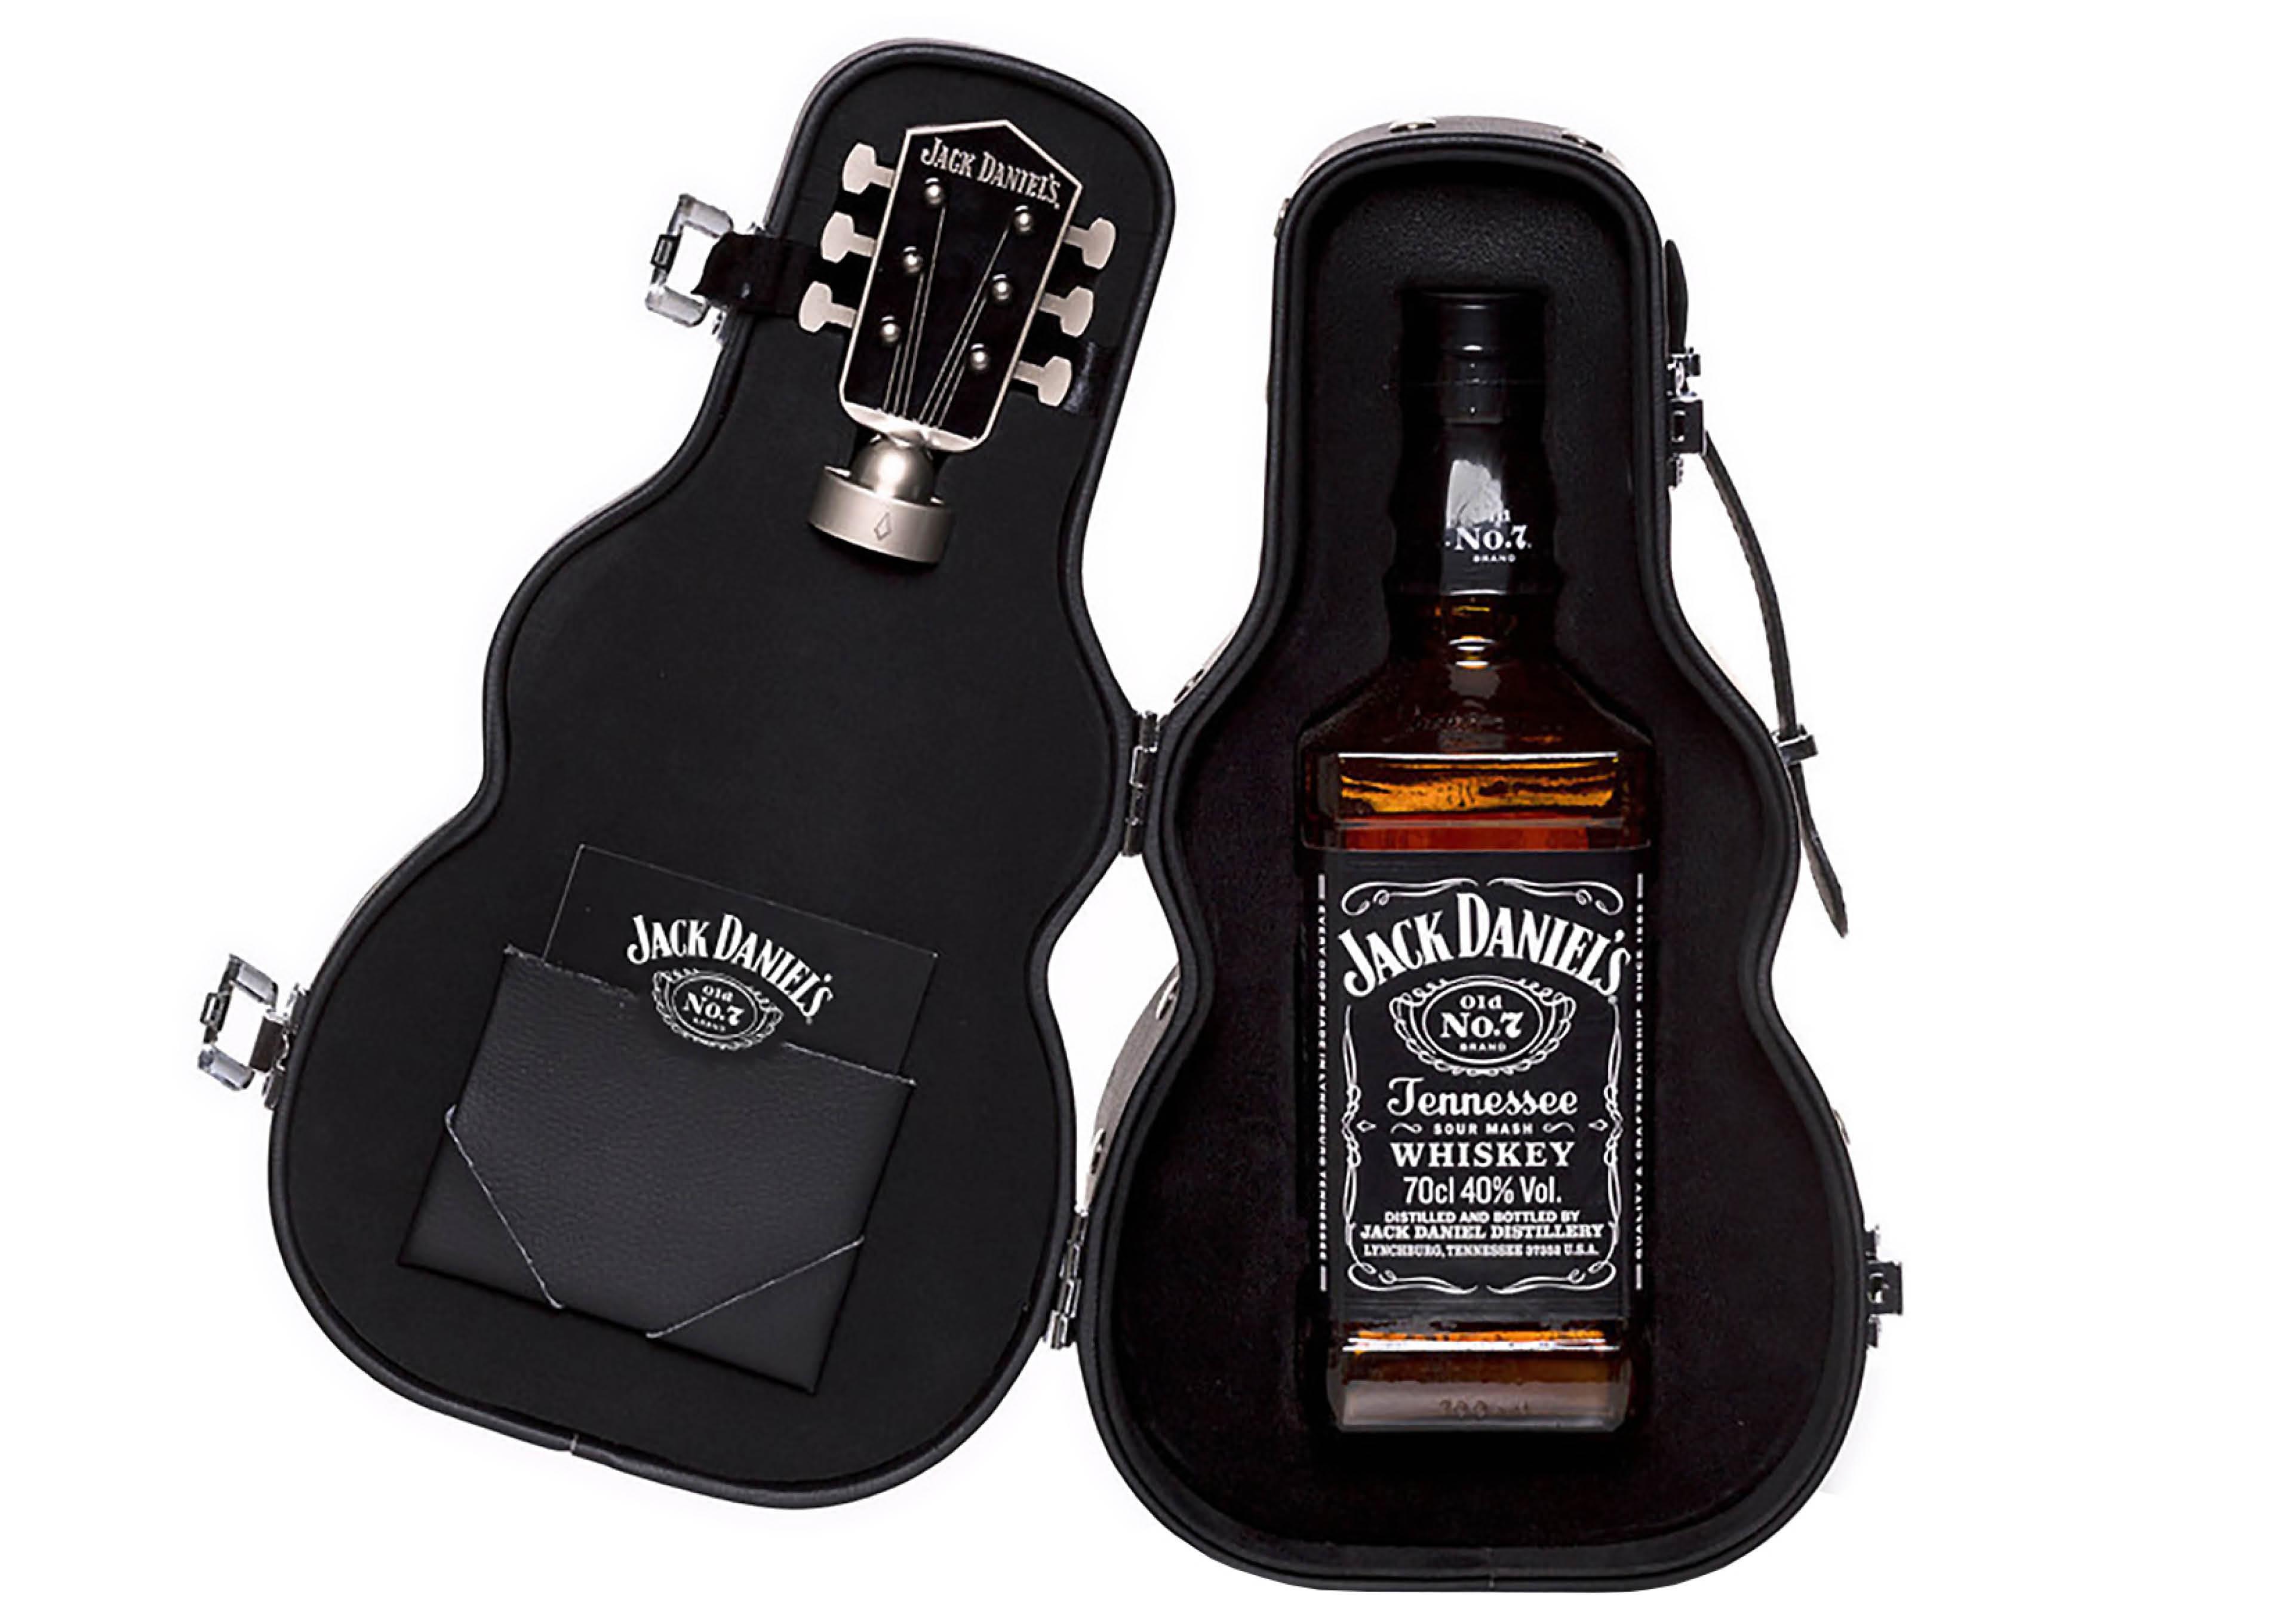 jack daniel's jack daniel's whisky 70 cl edizione chitarra limited edition